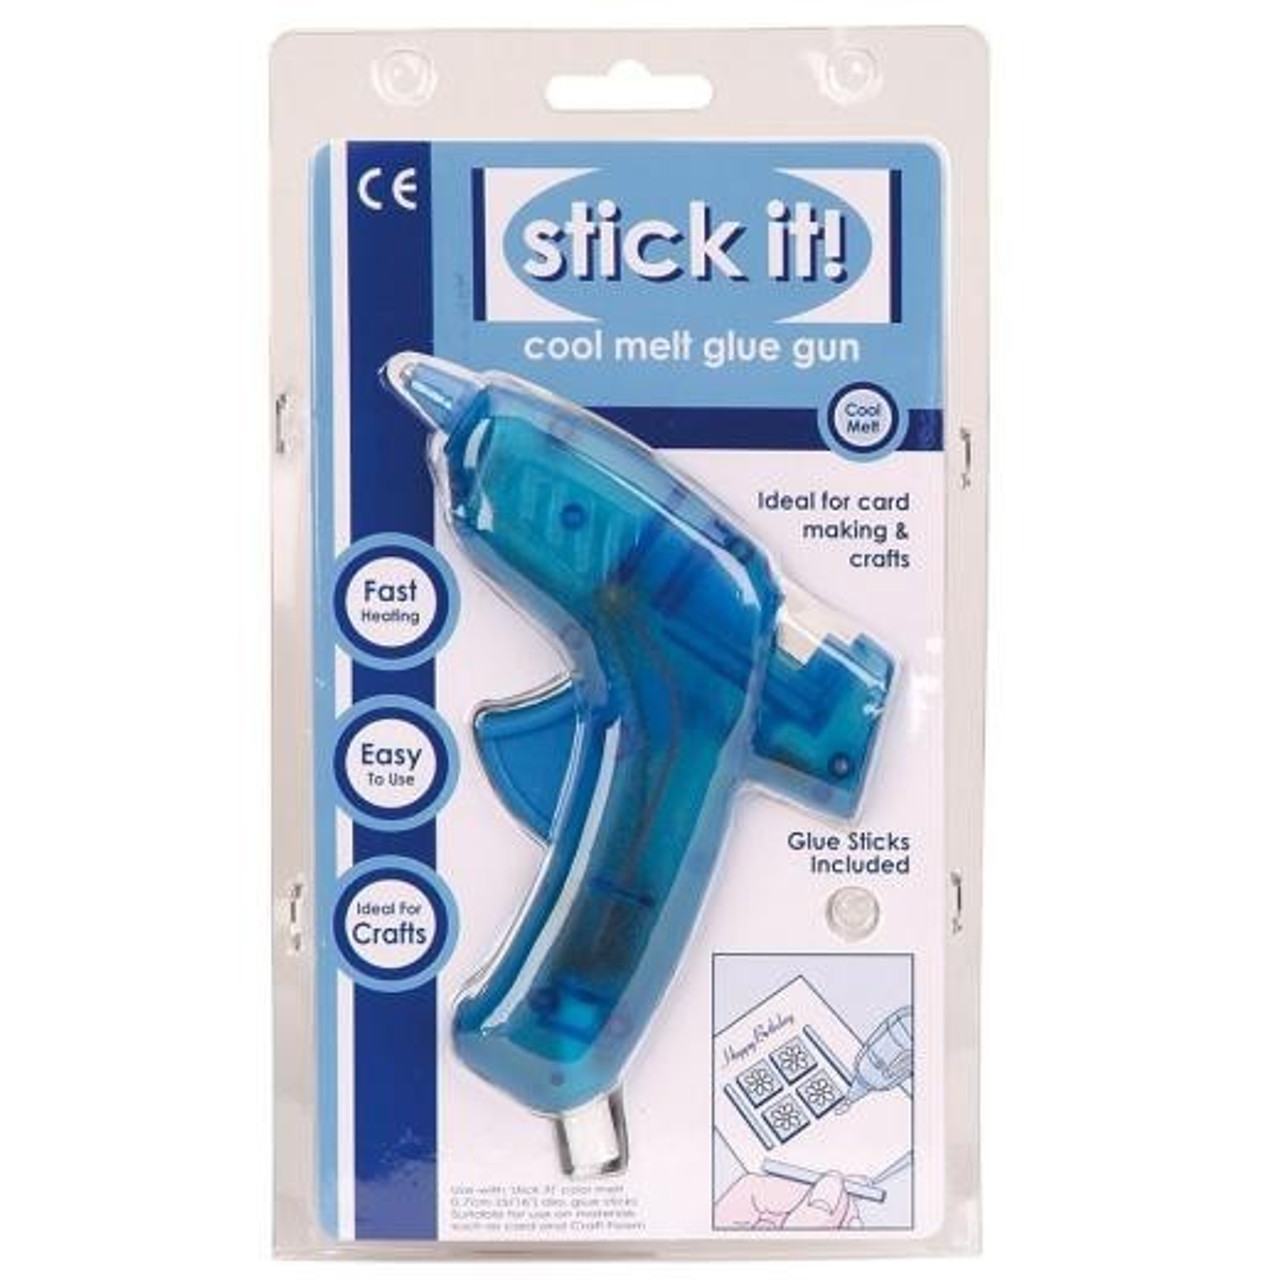 Stick It! Glue Gun - Cool Melt - Blue (UK Plug), One Size